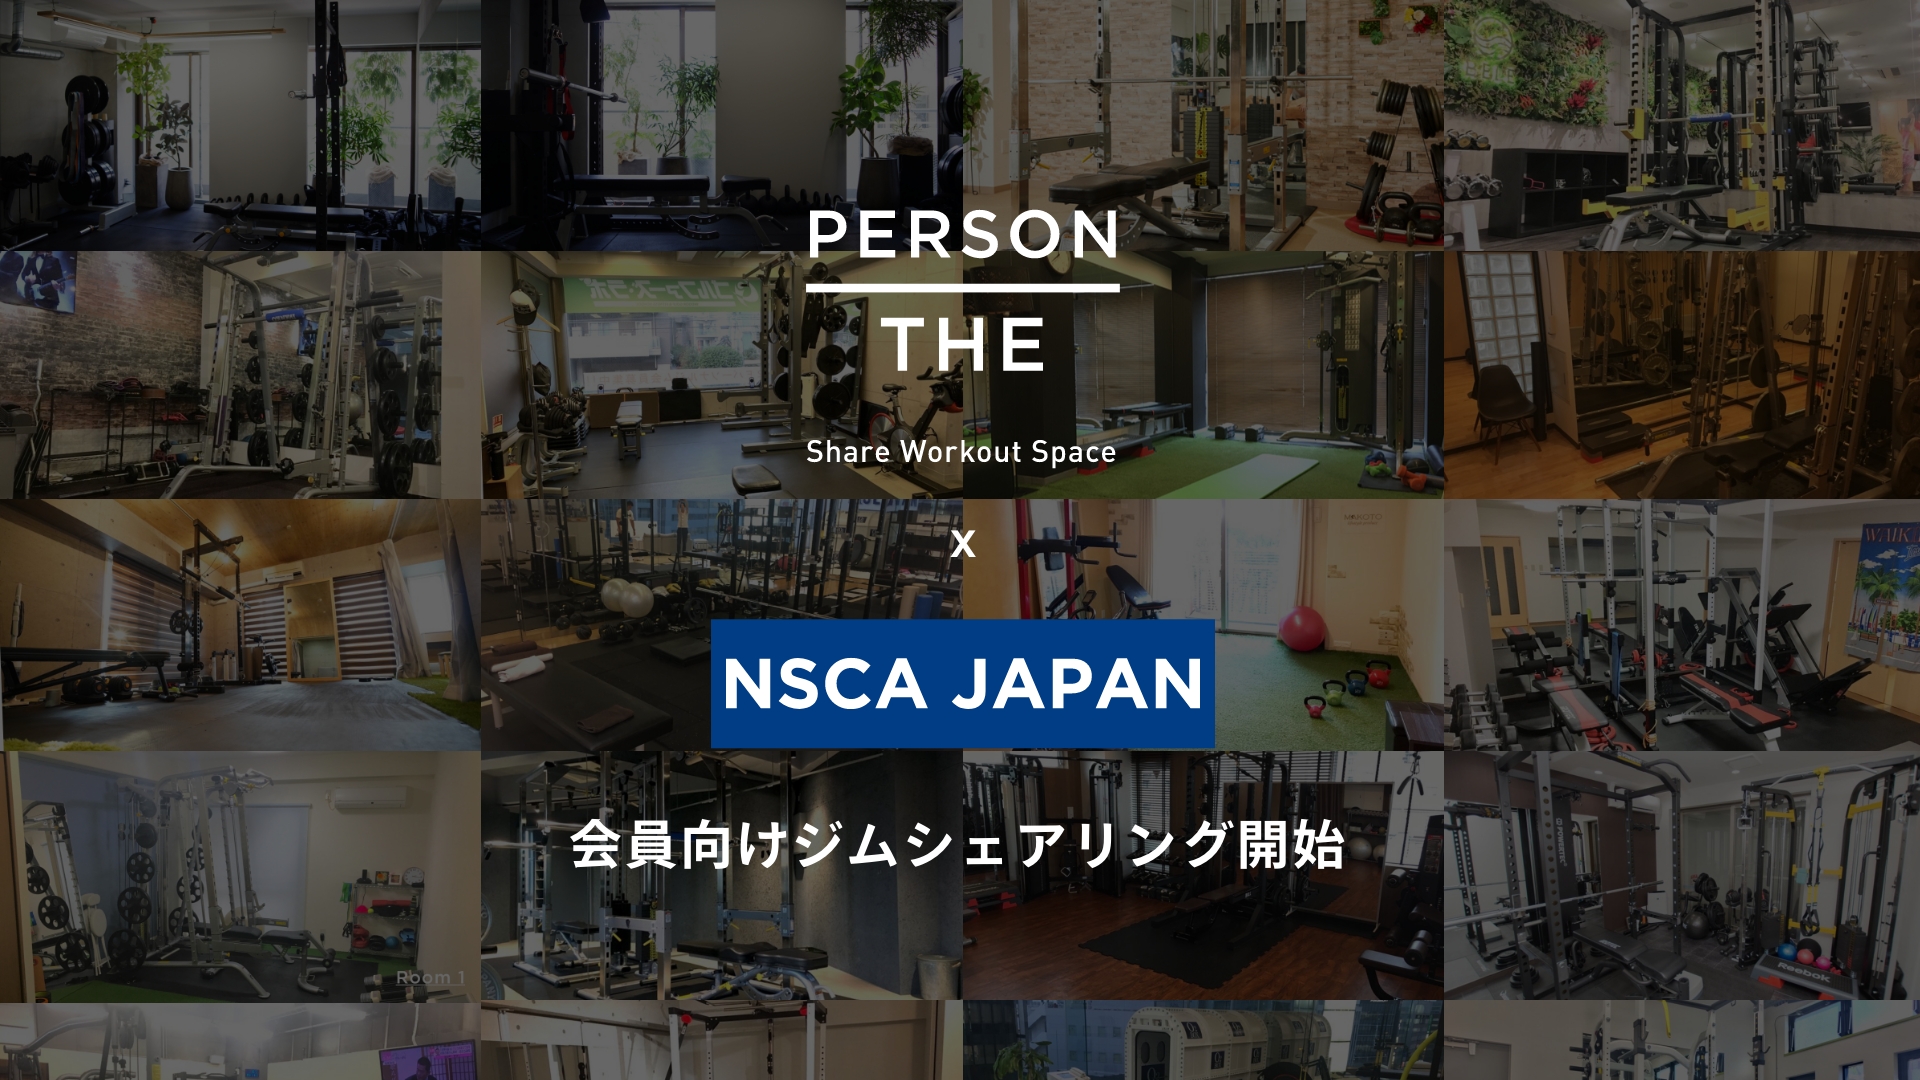 THE PERSON、国際的パーソナルトレーナー等の教育団体「NSCAジャパン」会員10,000名に向けサービス提供開始